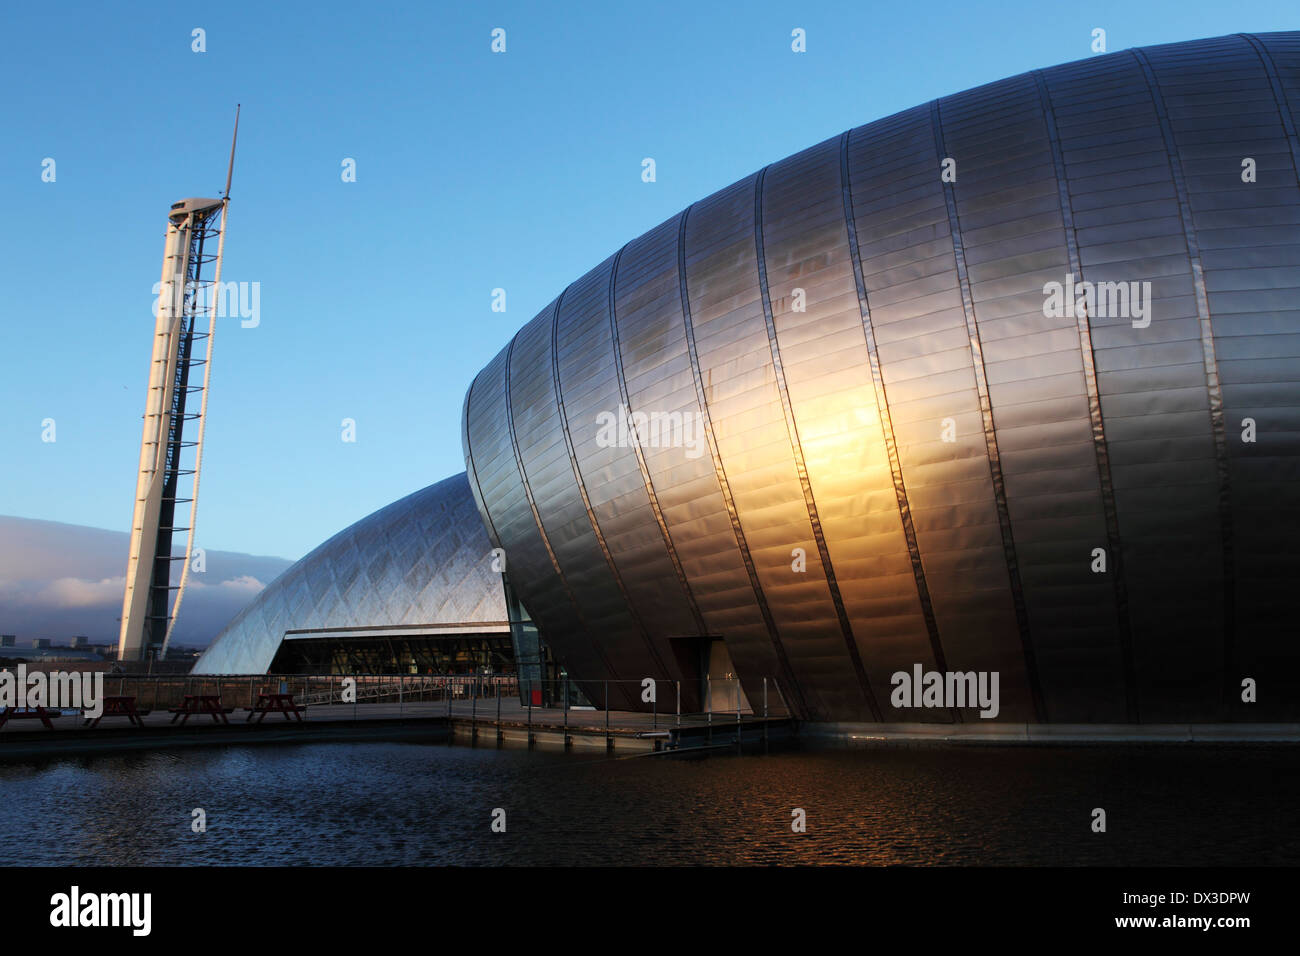 The metallic facade of the Glasgow Science Centre in Glasgow, Scotland. Stock Photo